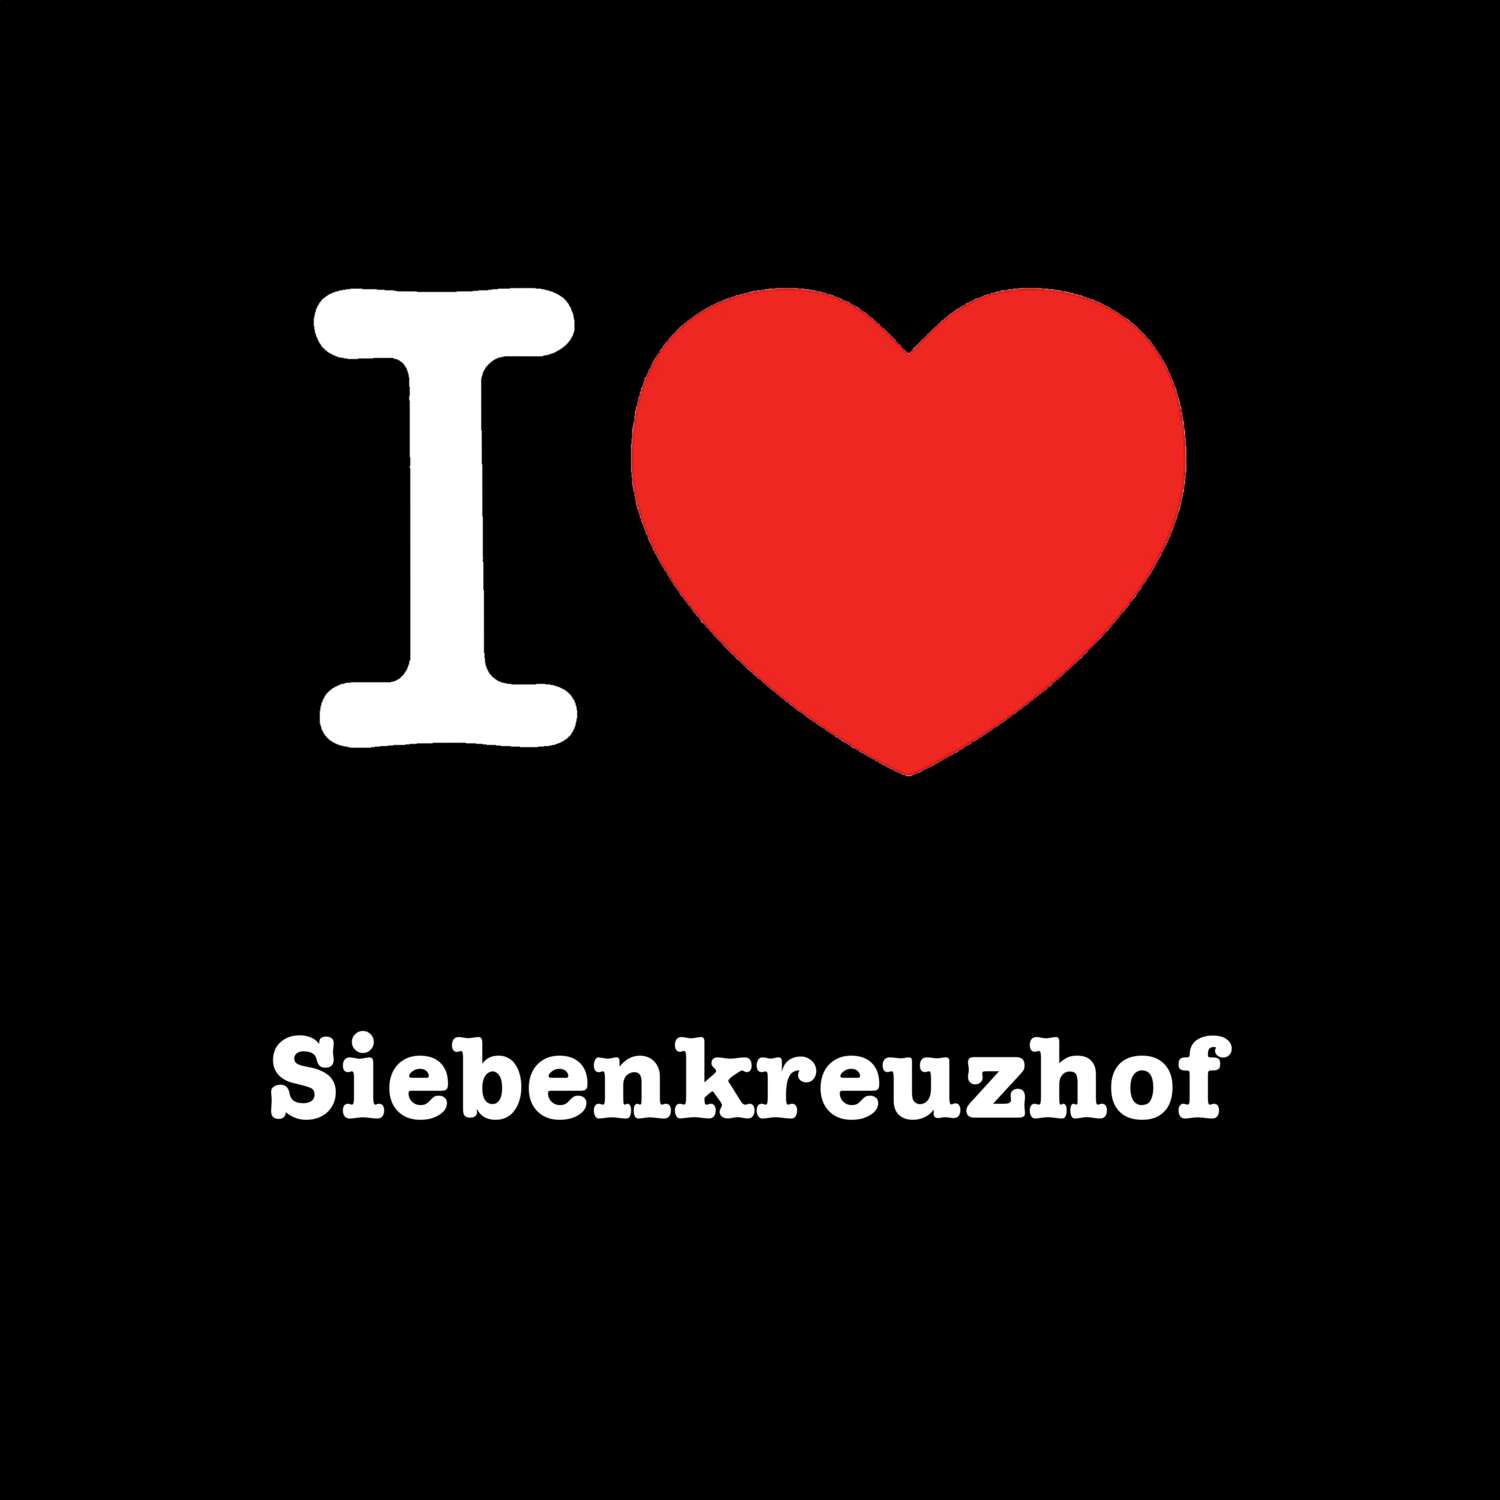 Siebenkreuzhof T-Shirt »I love«